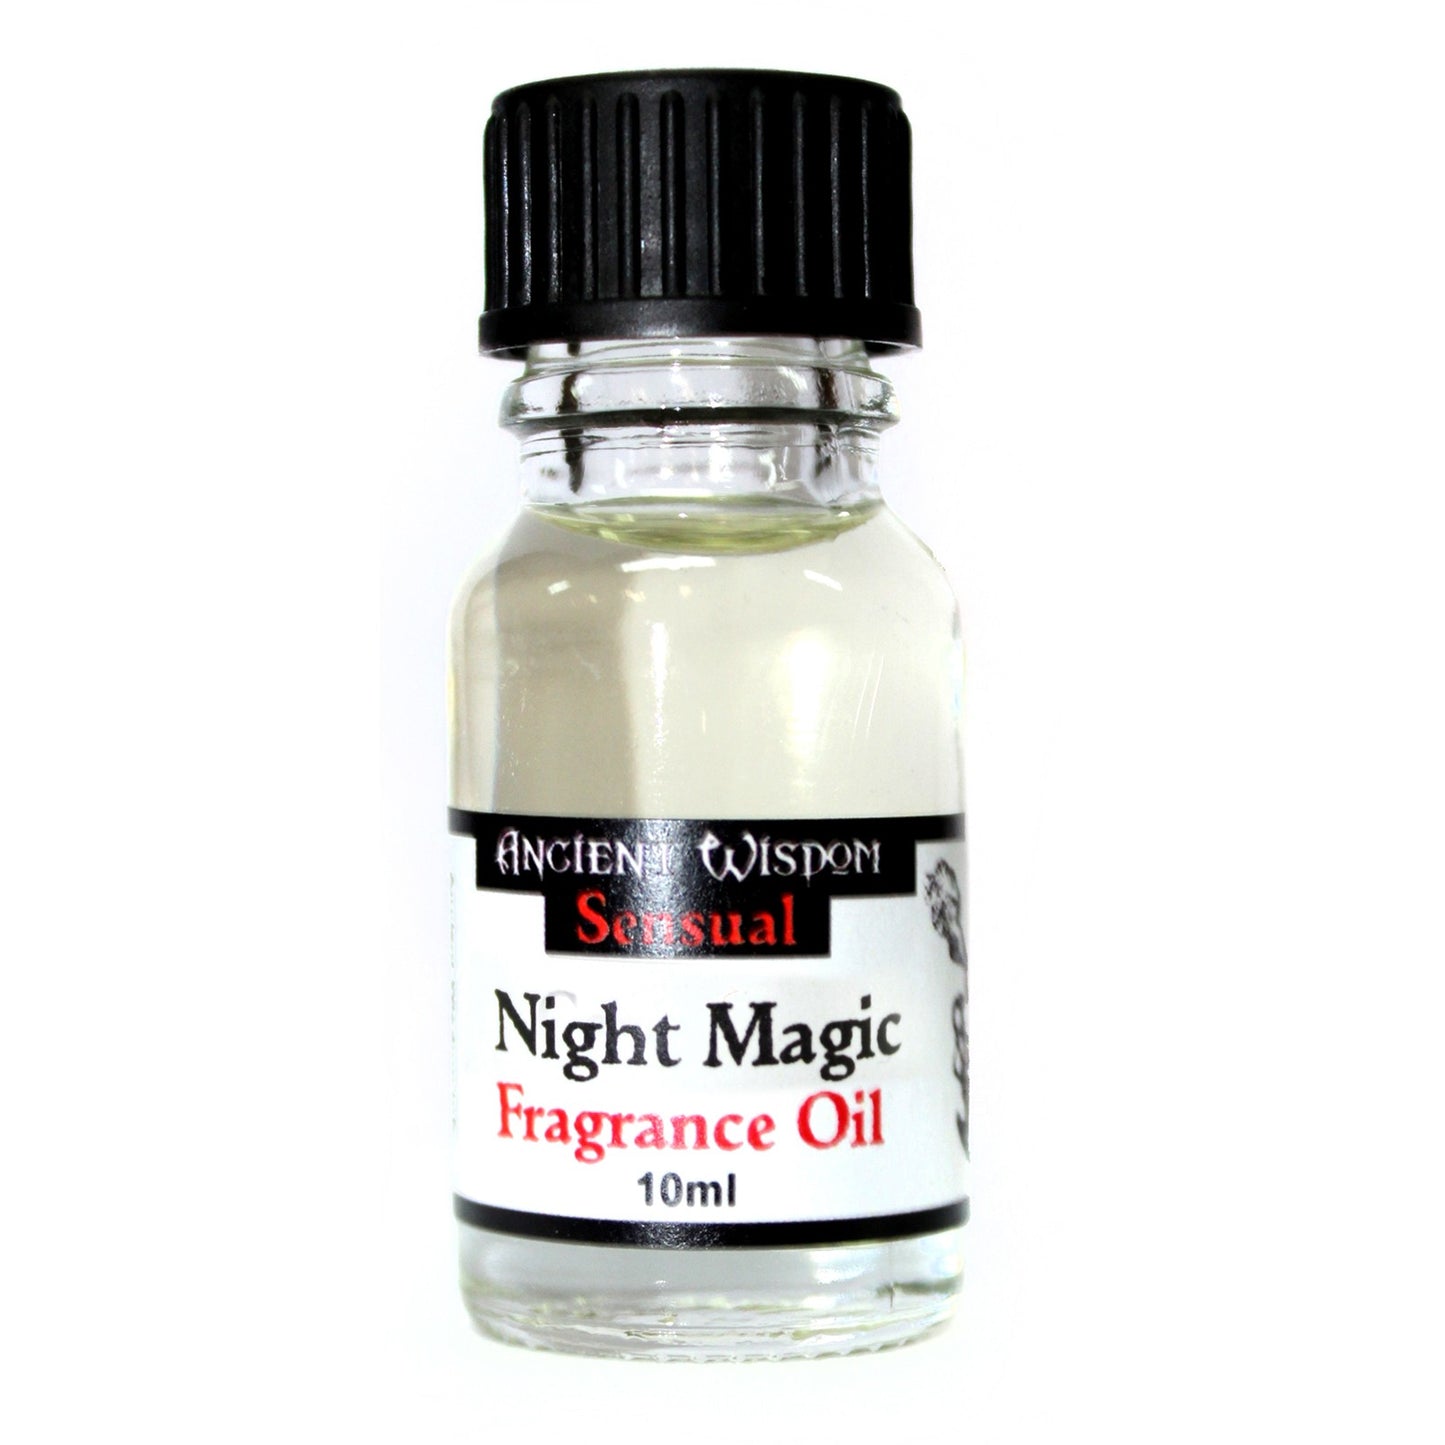 Night Magic Fragrance Oil - 10ml